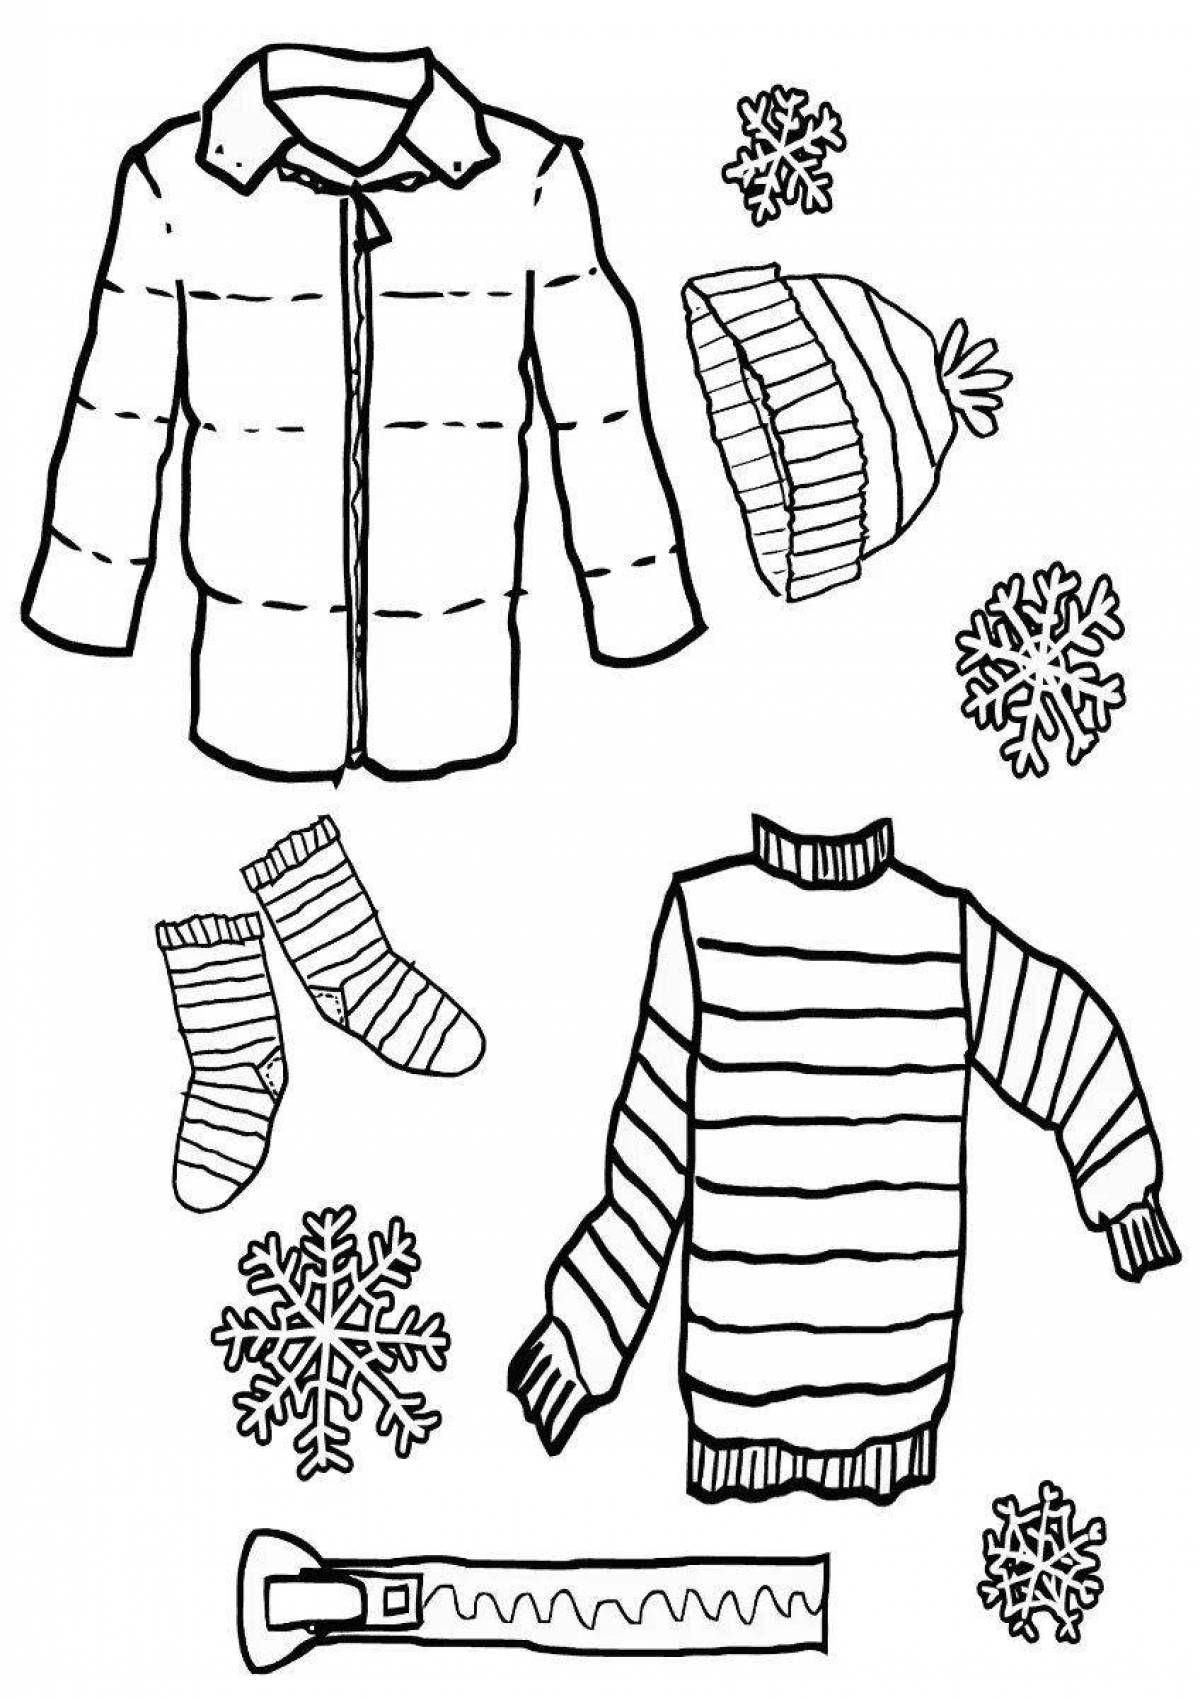 Coloring book luminous winter clothes for preschoolers